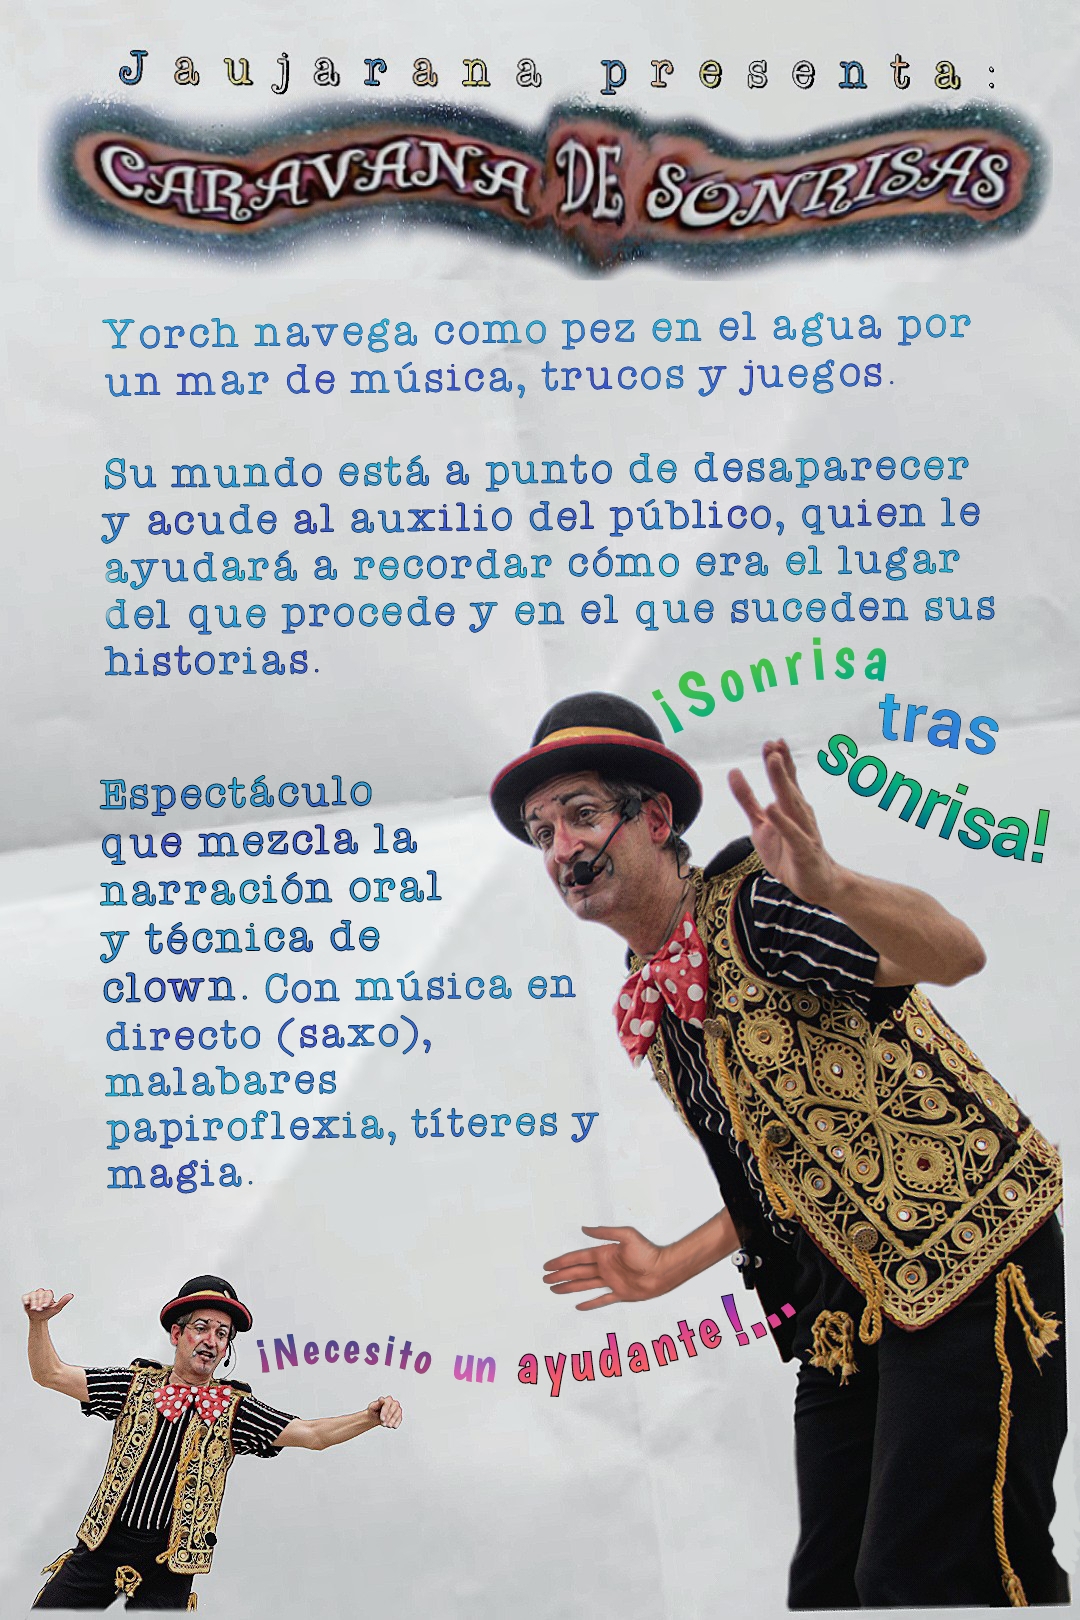 Jaujarana - Payasos / Clowns